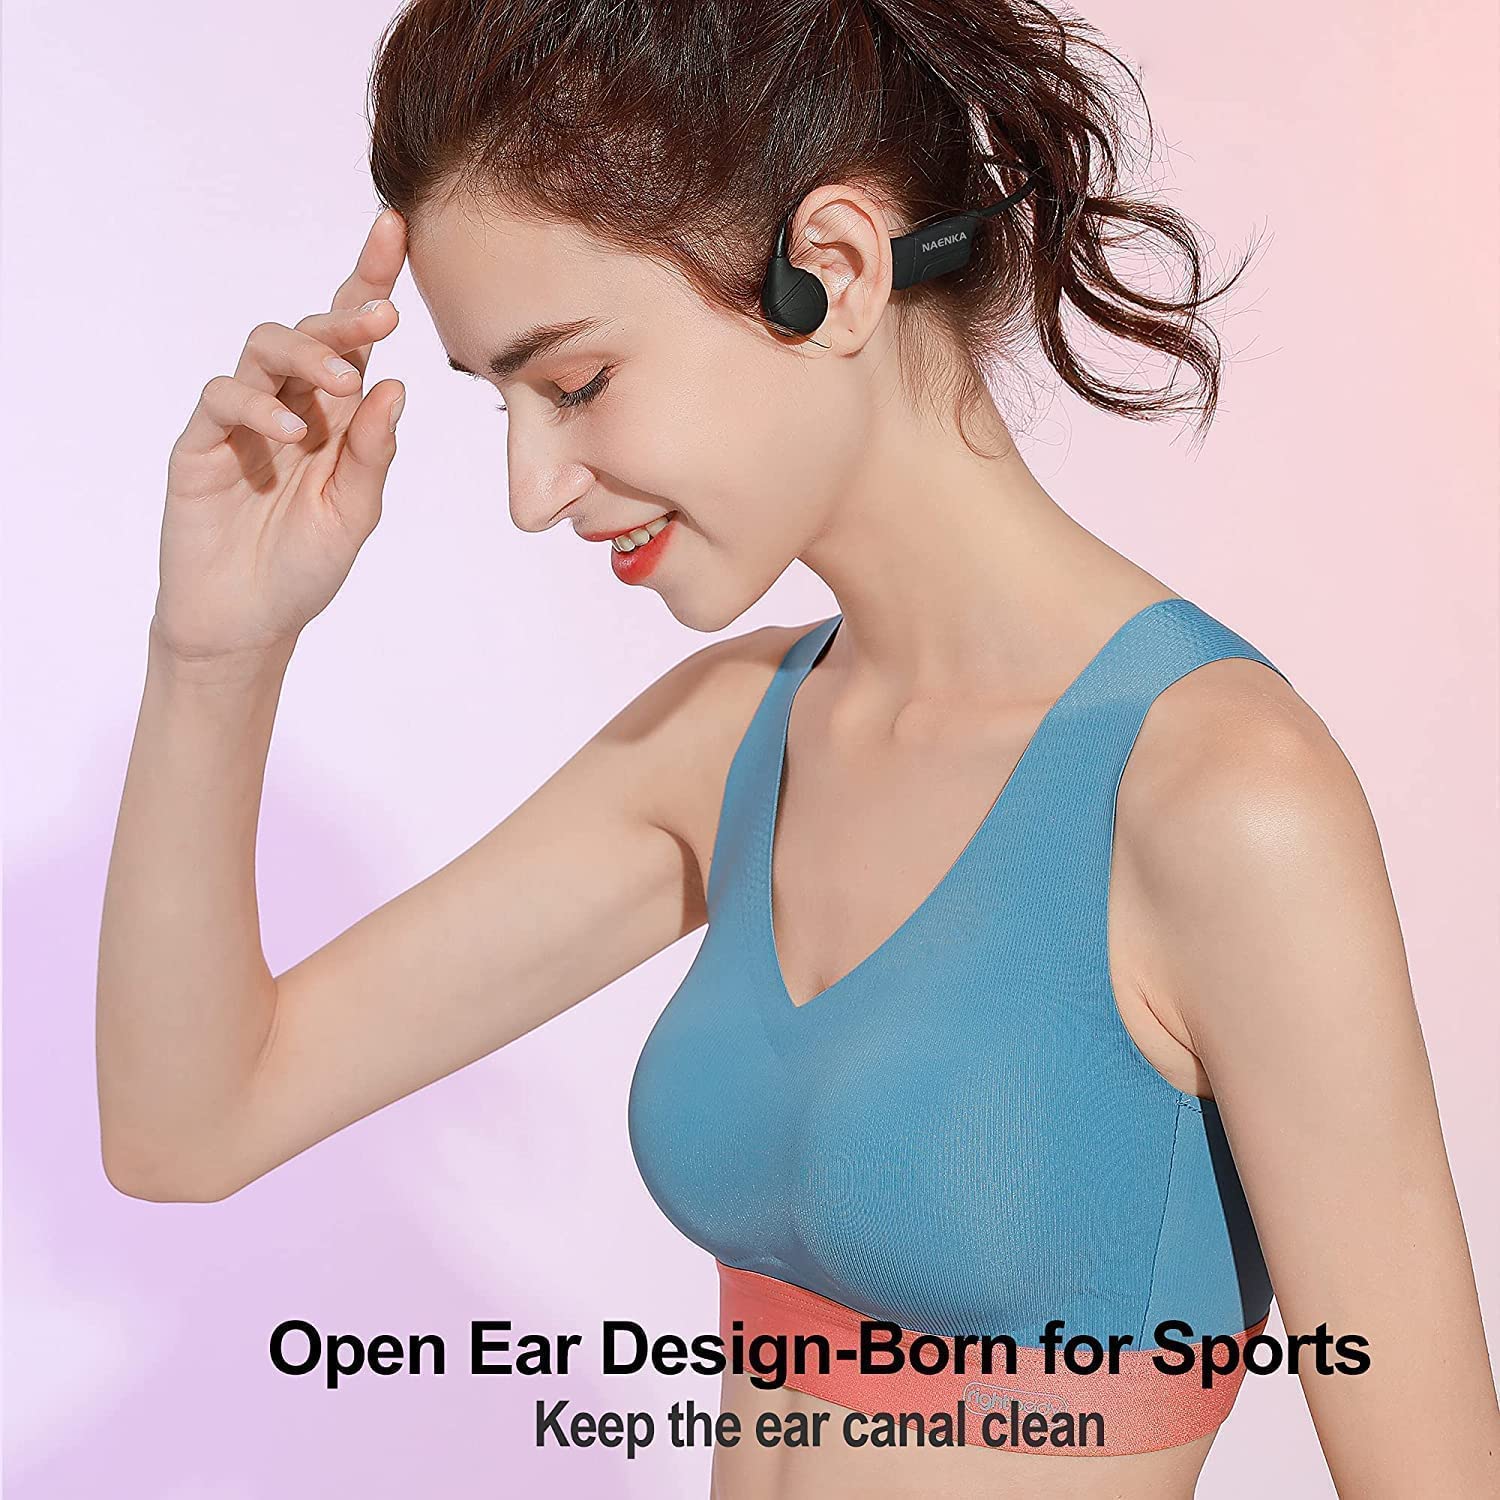 A girl who runs a sport wearing bone conduction headphones